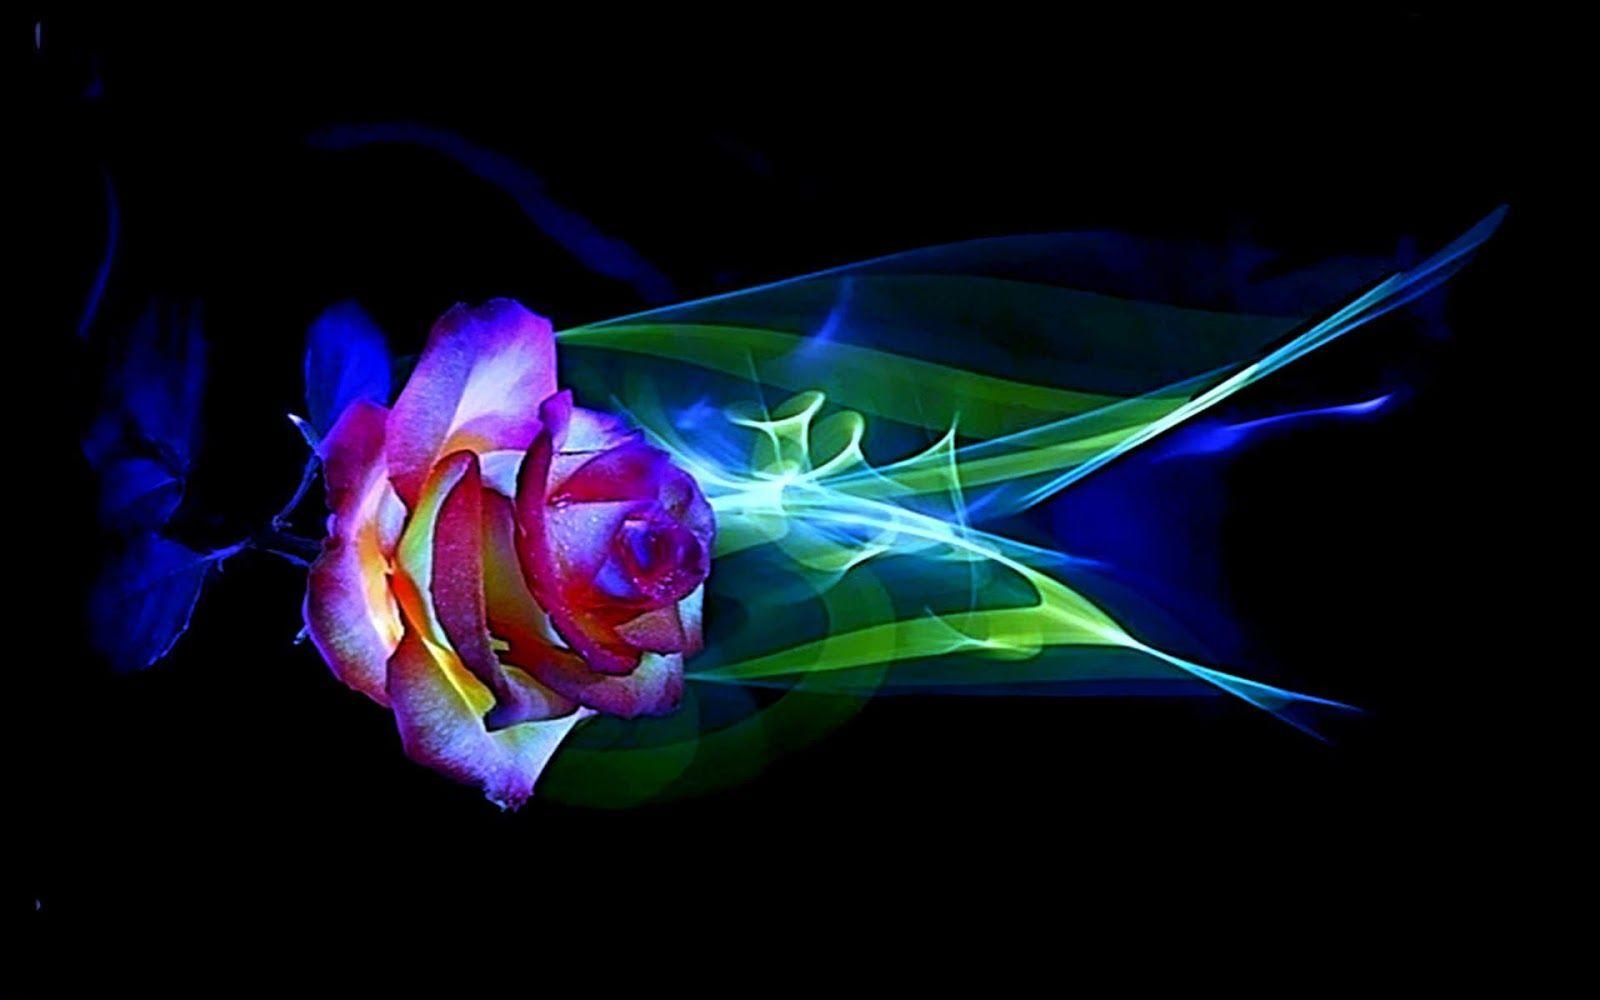 Neon Rose by Leslie Revels